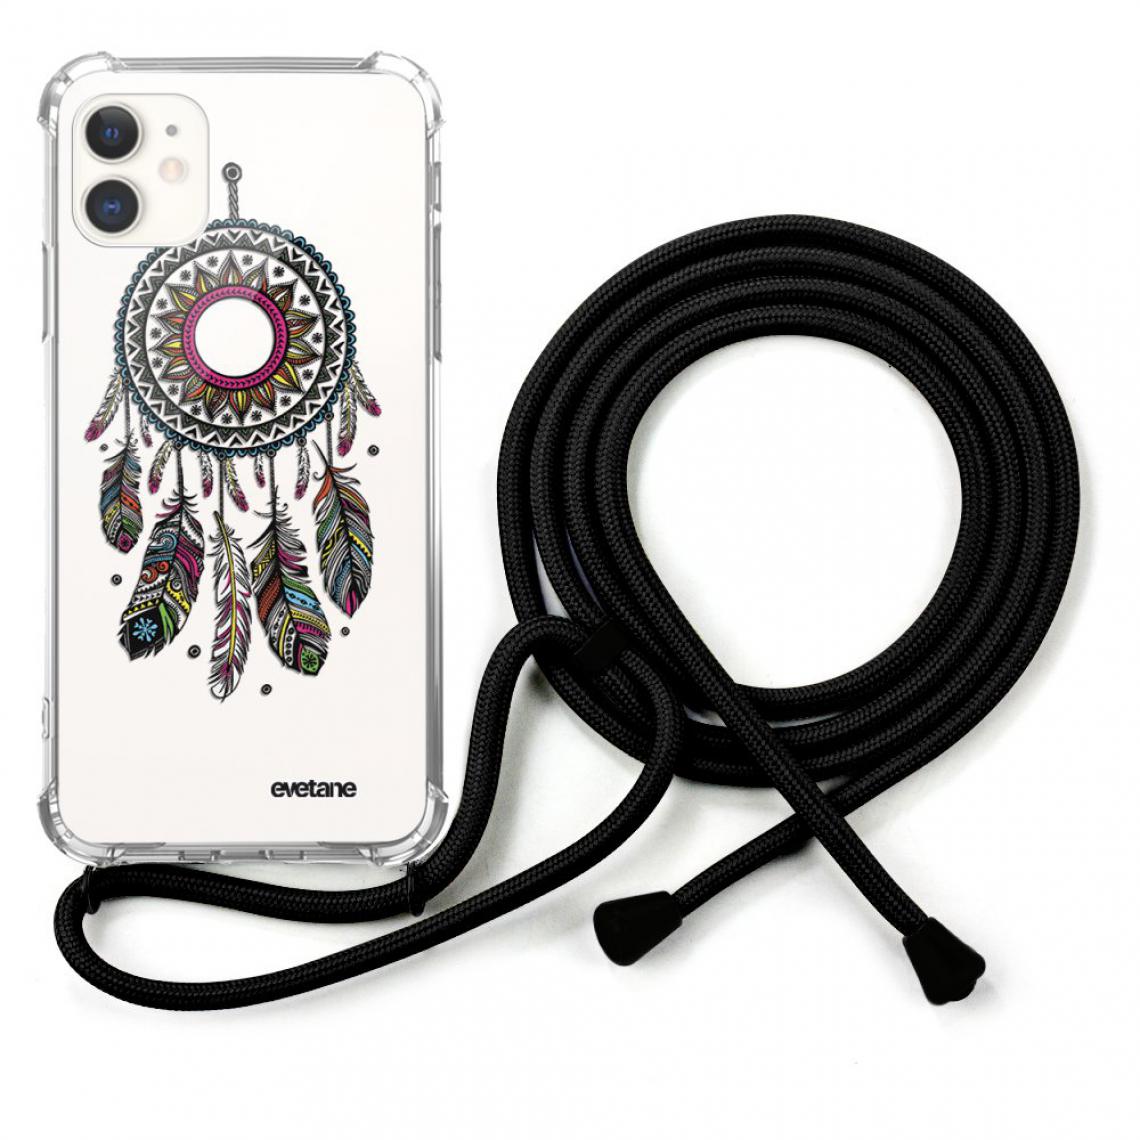 Evetane - Coque iPhone 12 Mini coque avec cordon Attrape rêve - Coque, étui smartphone